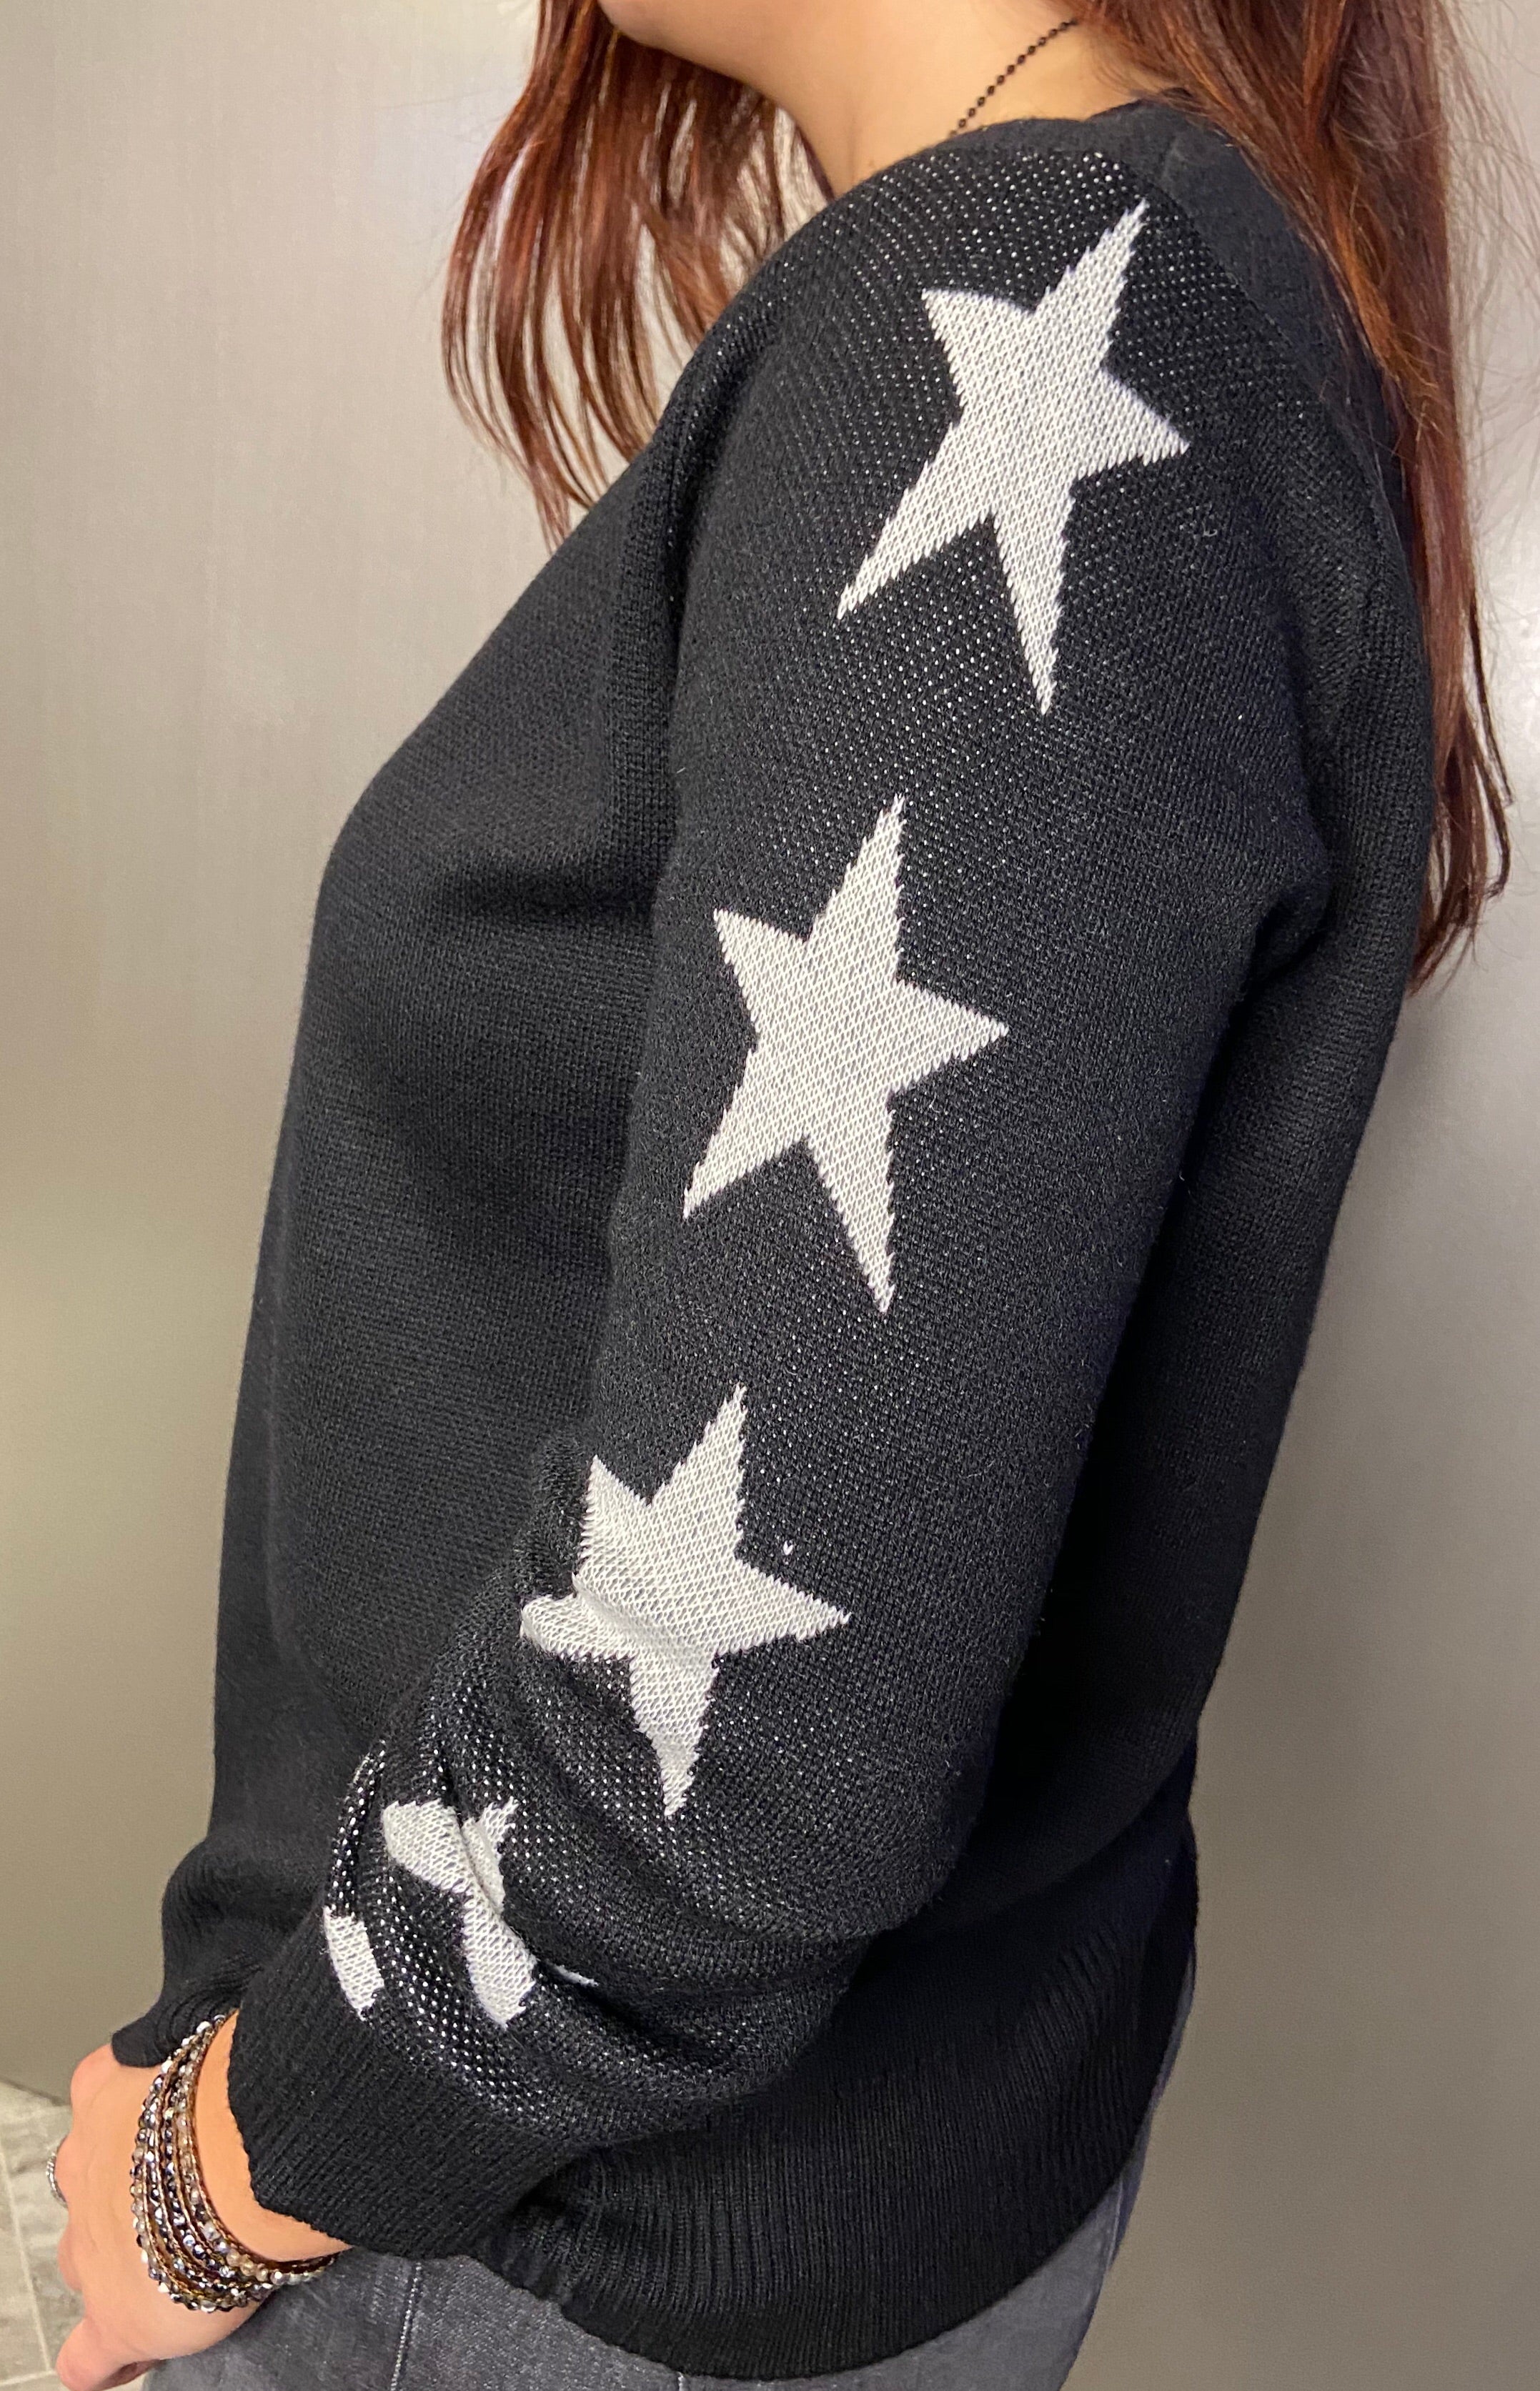 Star sleeve knit